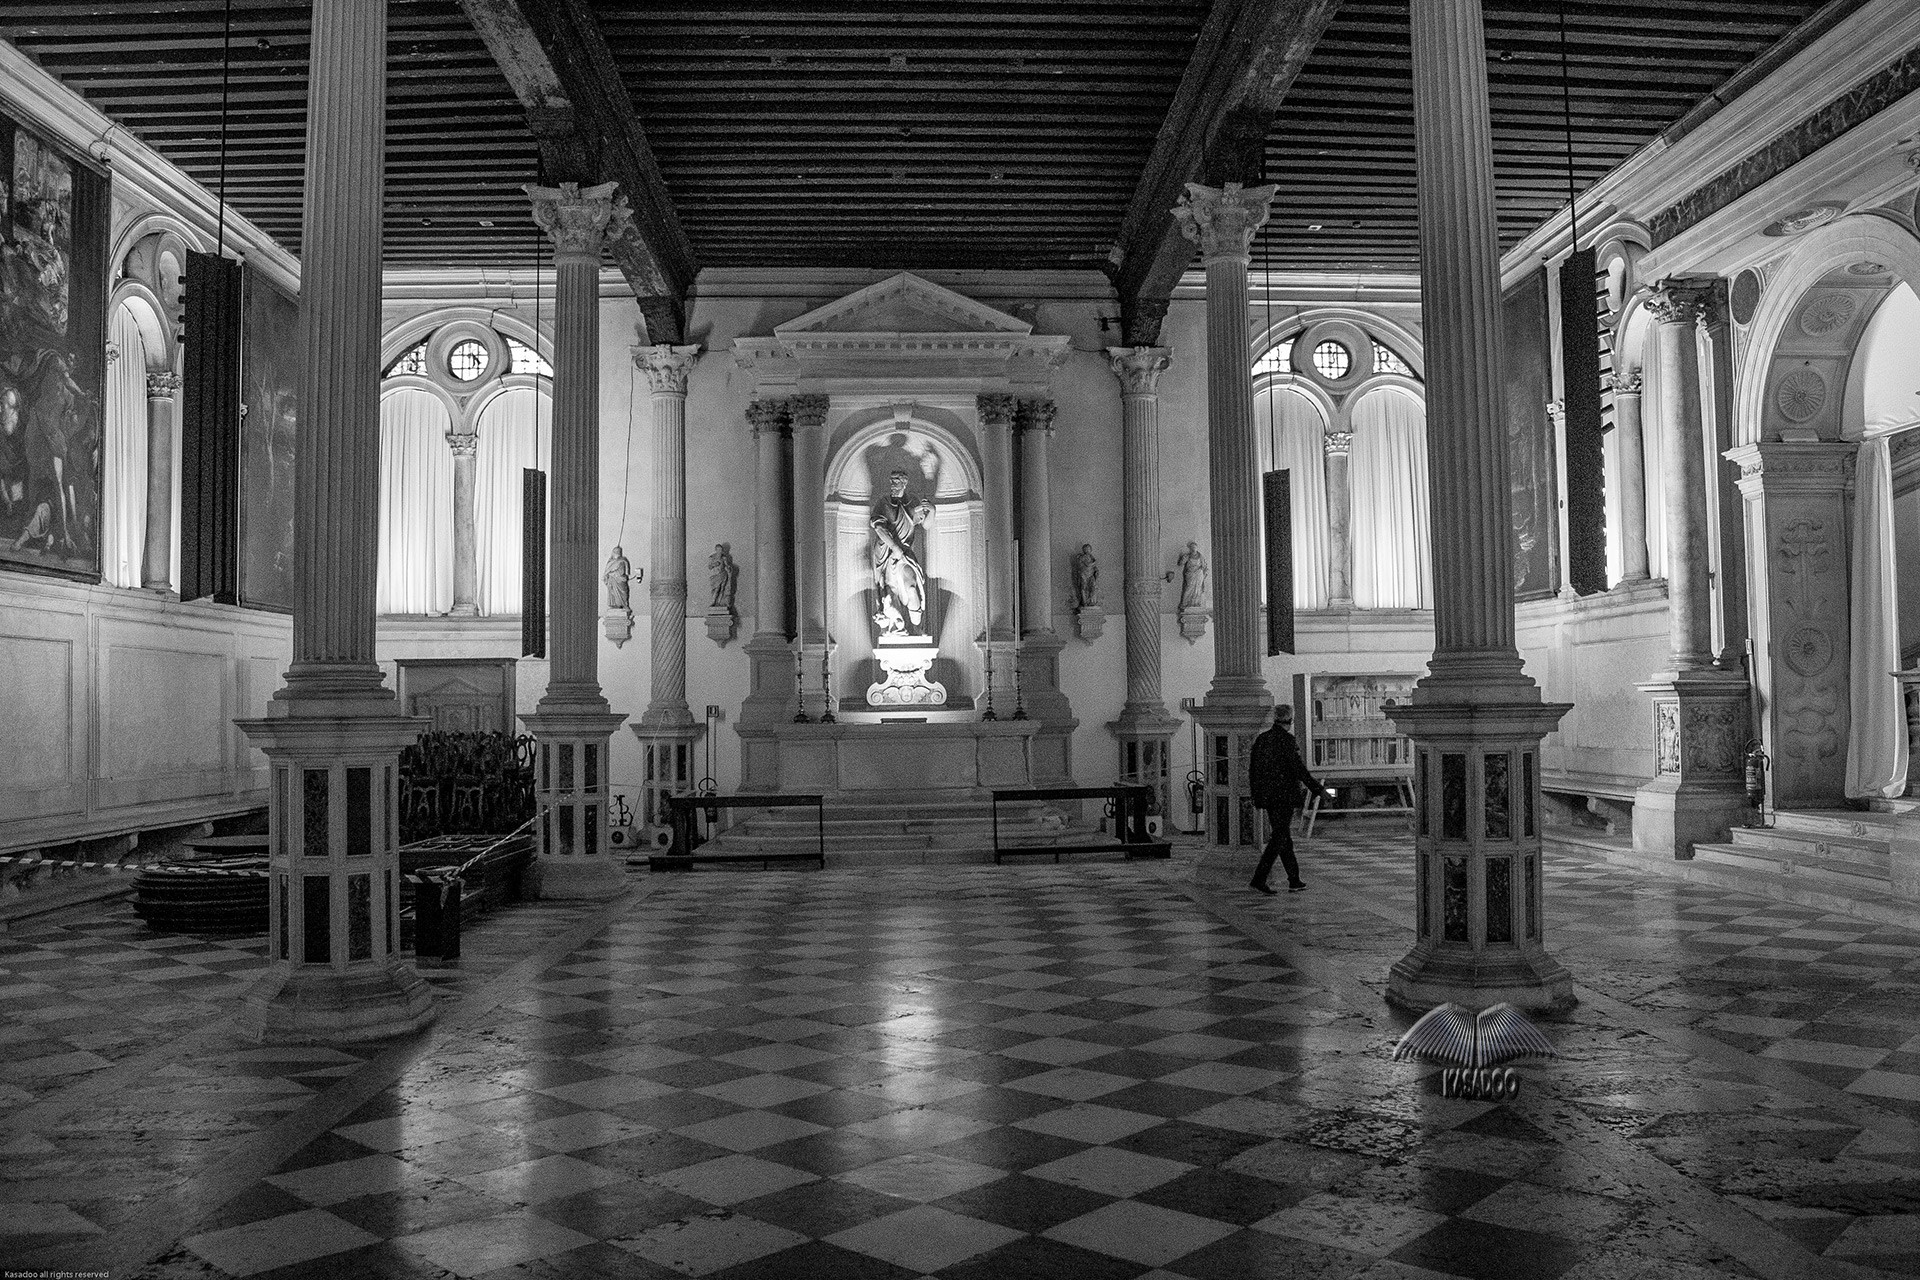 The Lower Floor in Great School of San Rocco in Venice-Italy